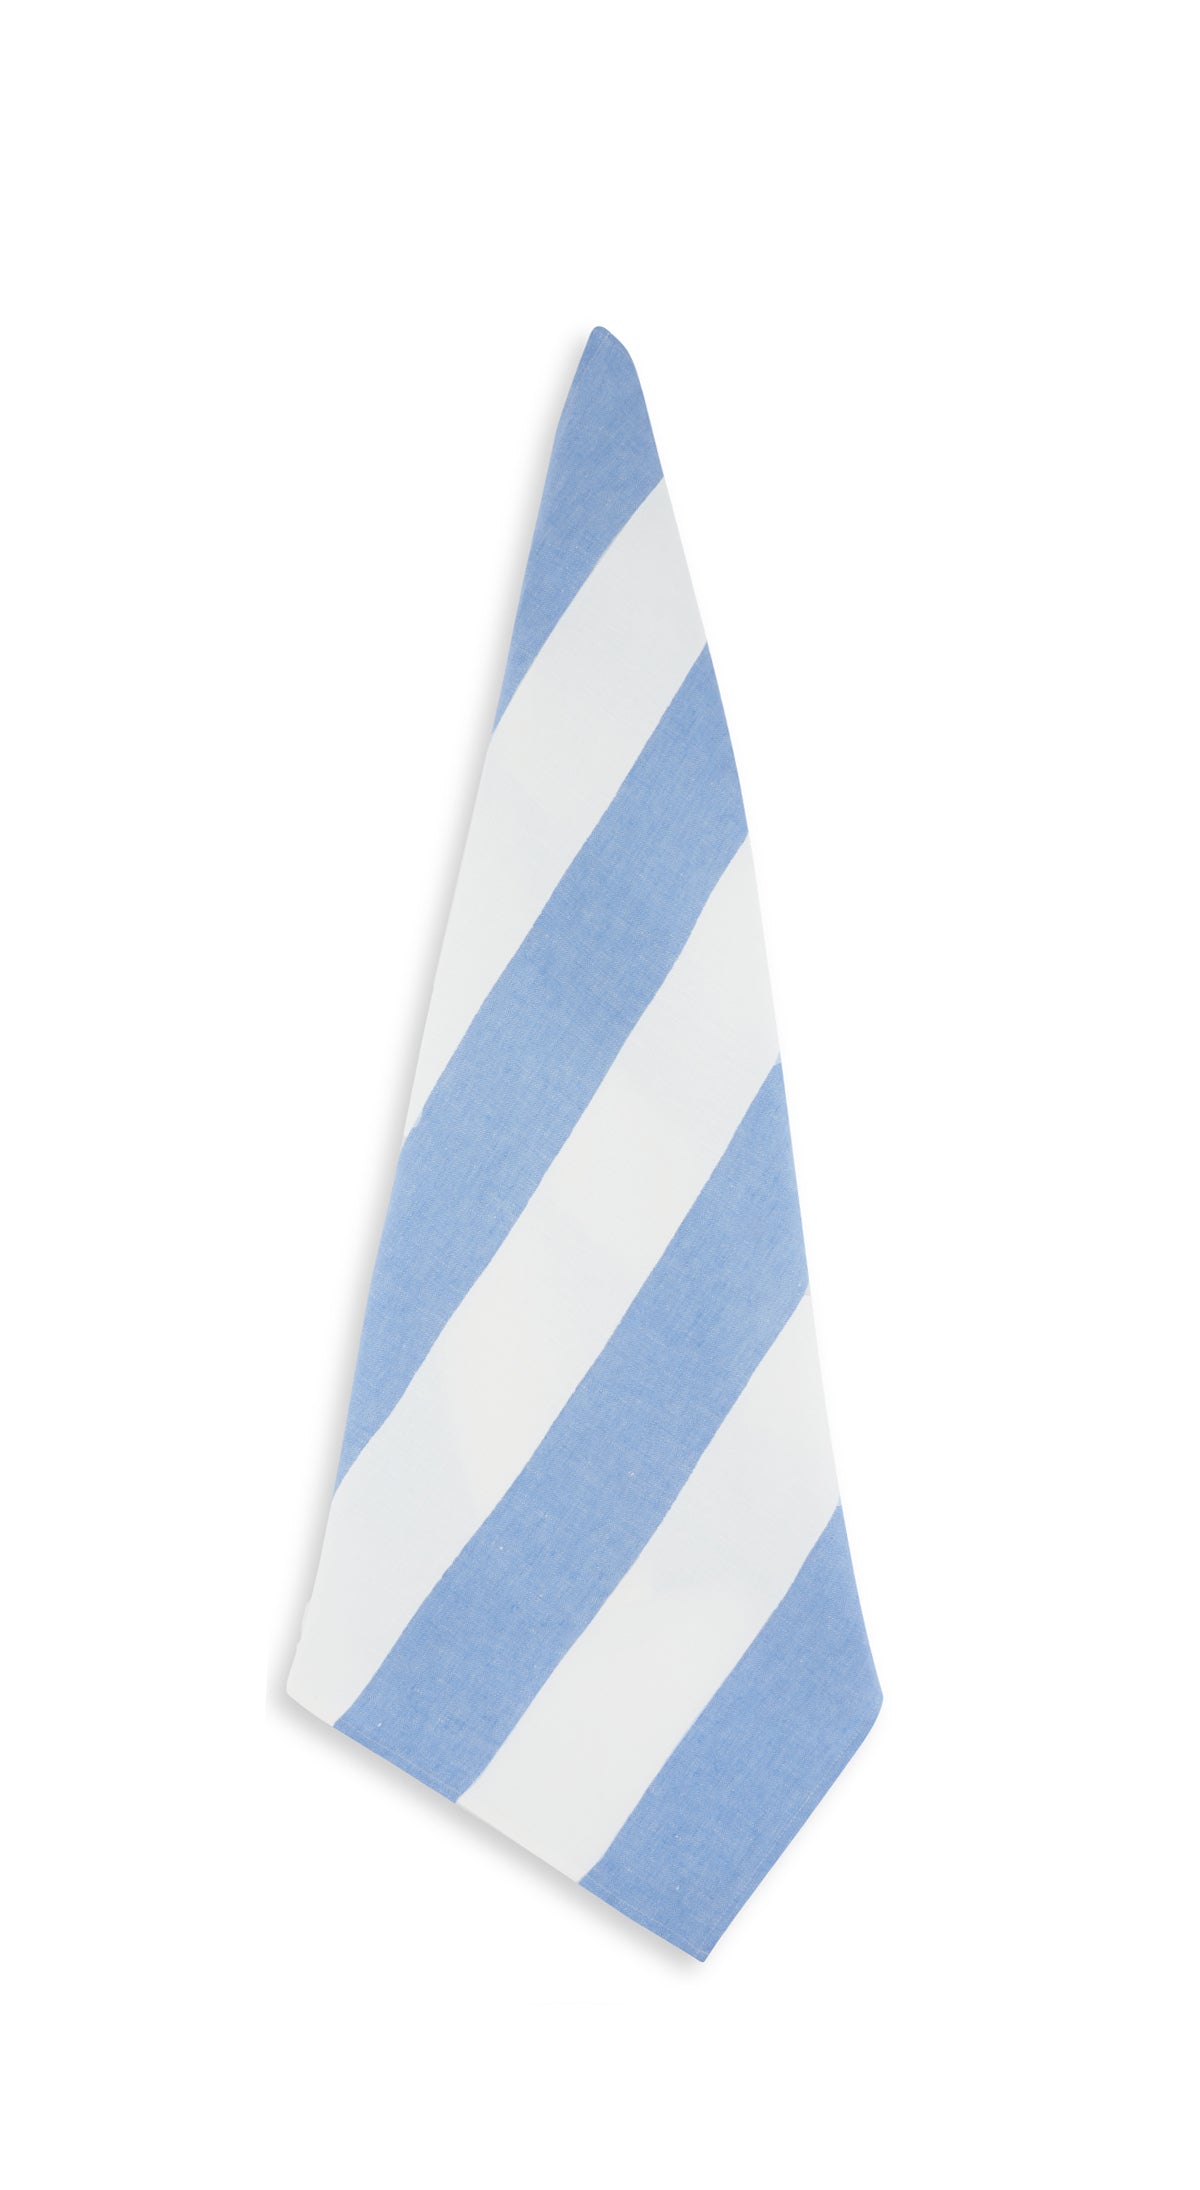 Fine Irish Linen Tea Towel in Blue and White Stripe, 58x73cm